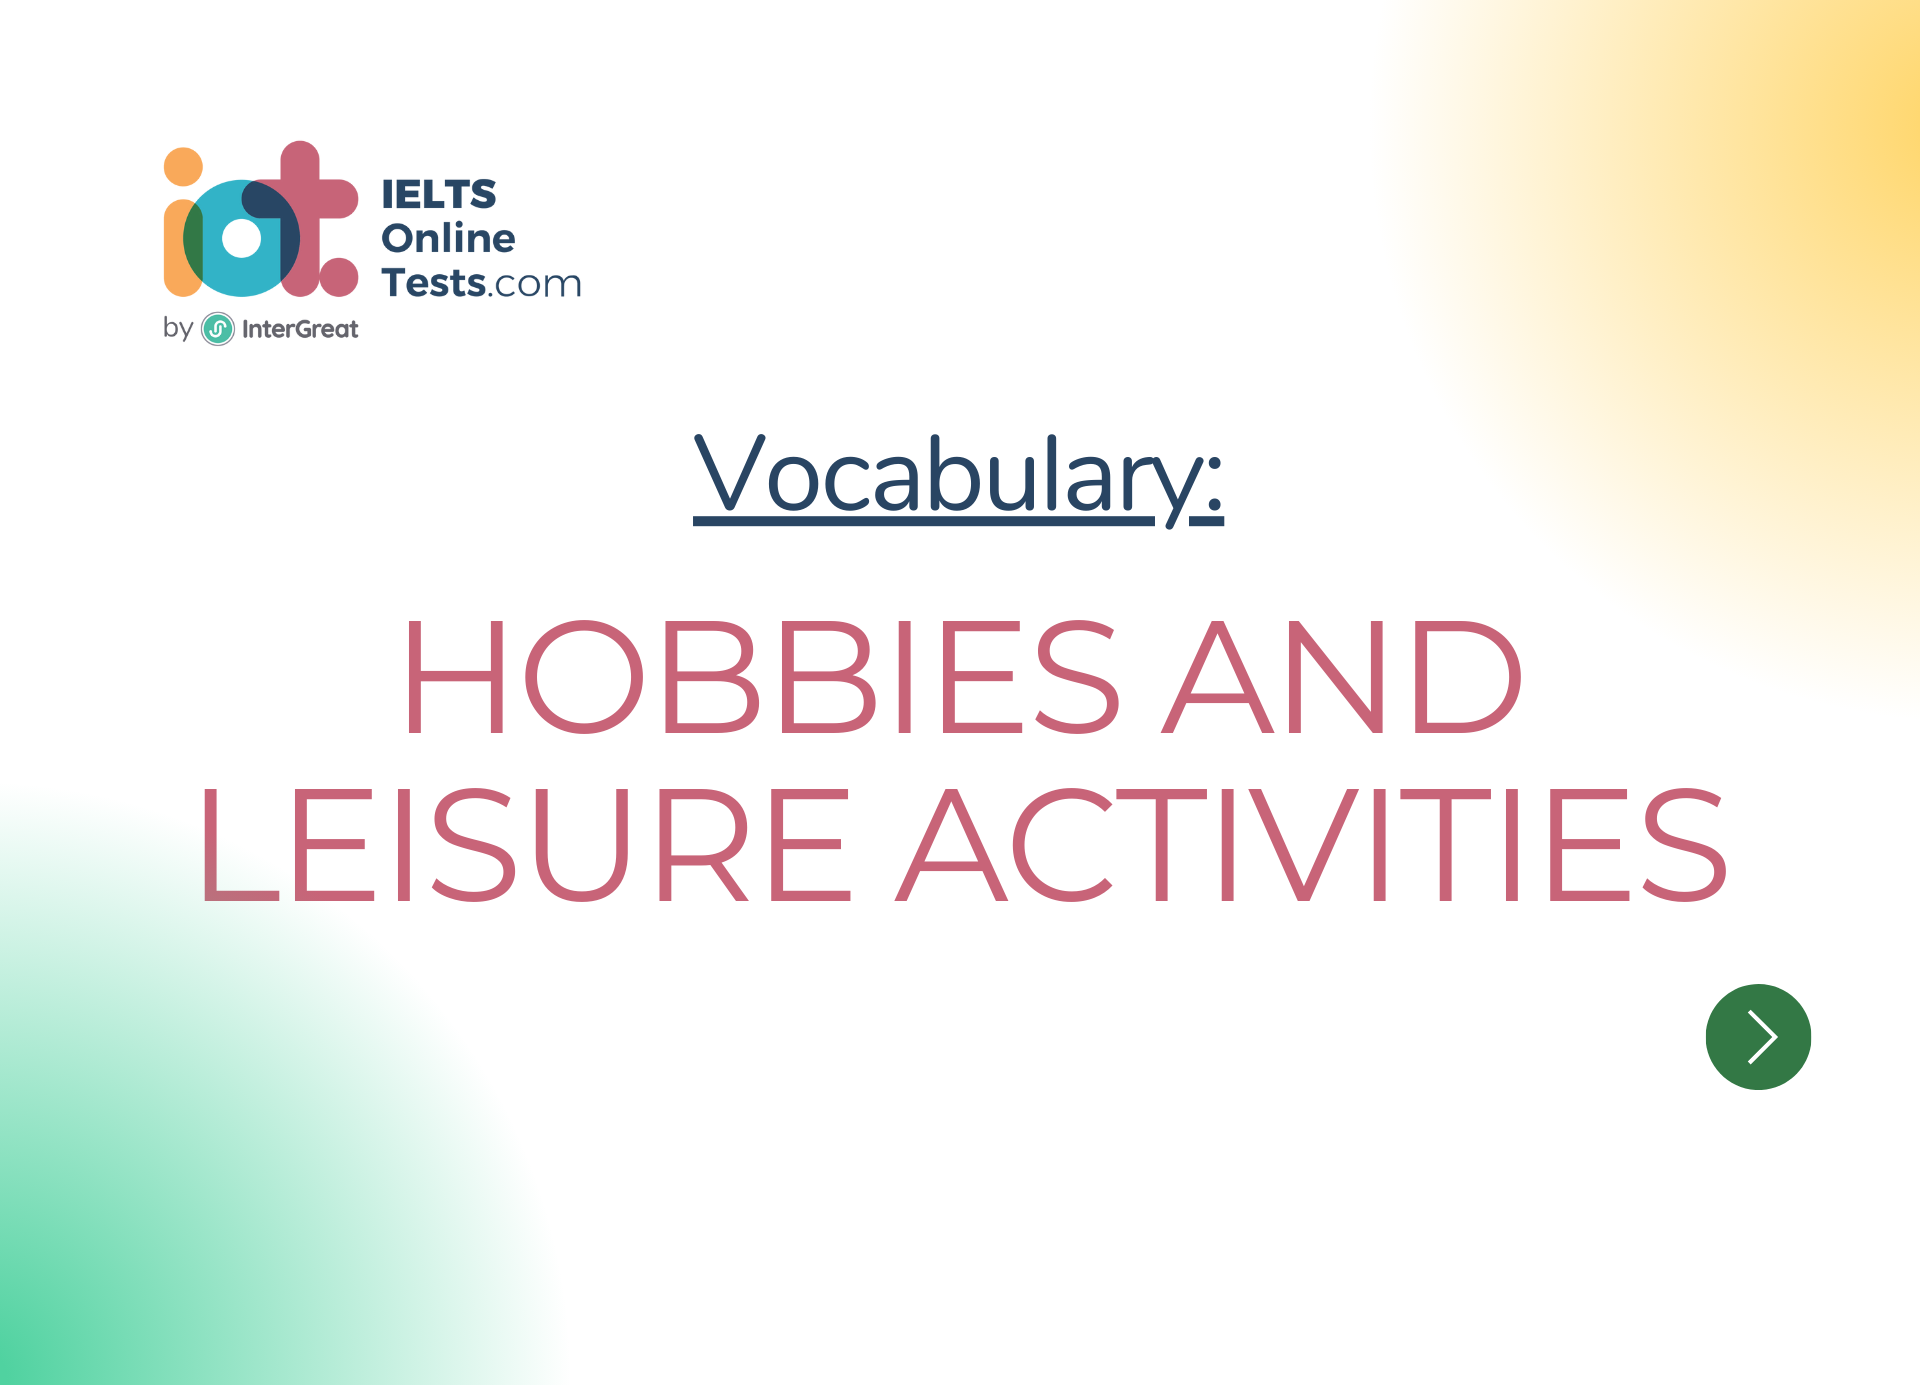 Hobbies and leisure activities